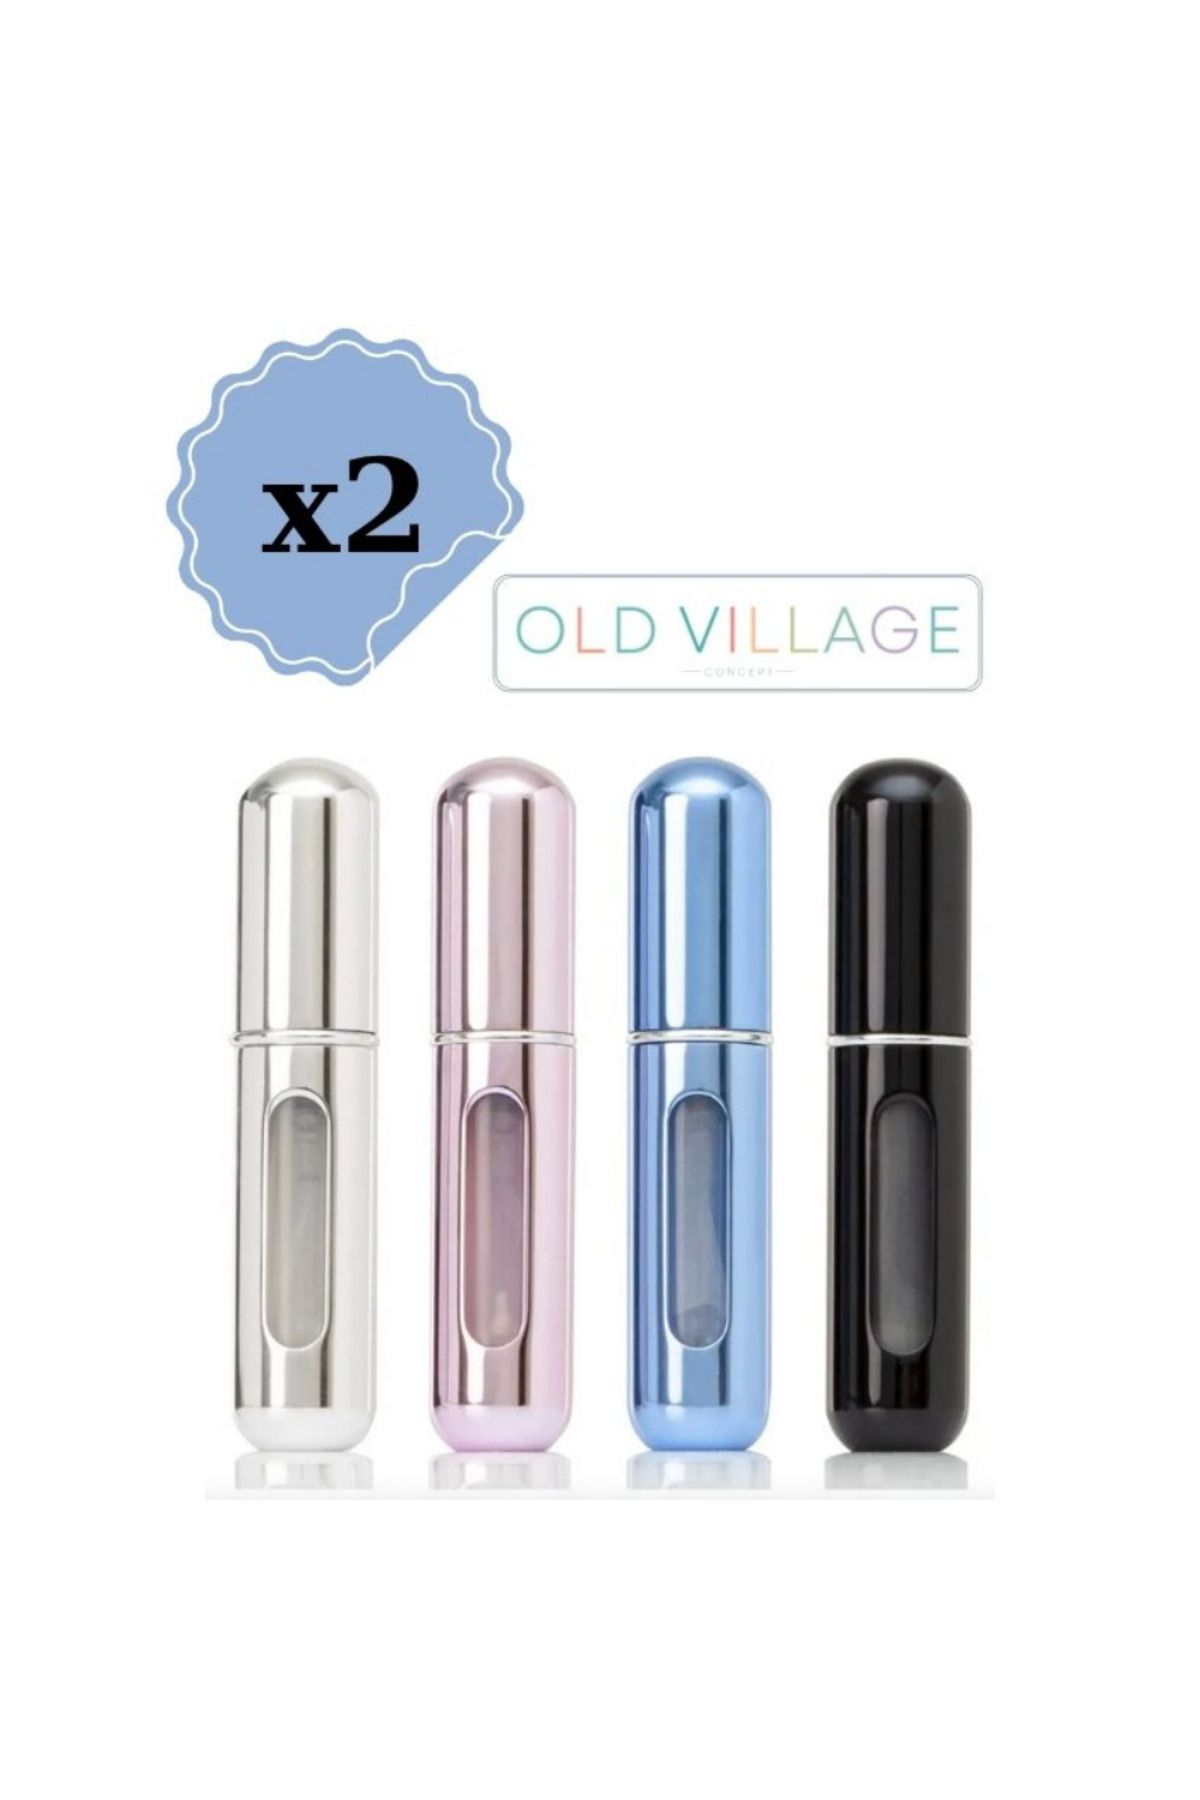 Old Village Concept Mini Cep Parfüm Şişesi 2'li Paket Atomizer Seyahat Parfüm Şişesi